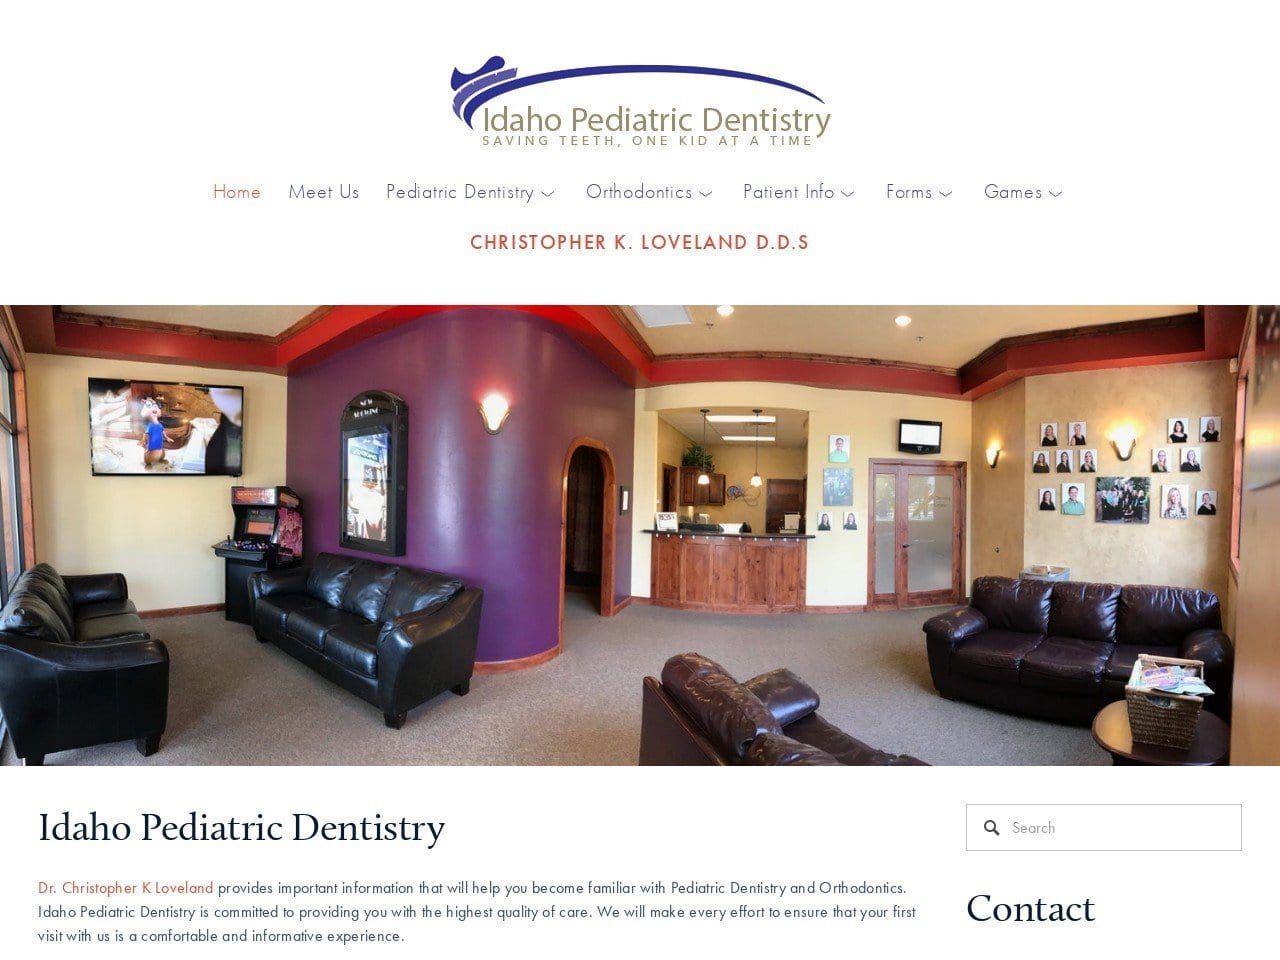 Idahopediatric Dentistry Website Screenshot from idahopediatricdentistry.com